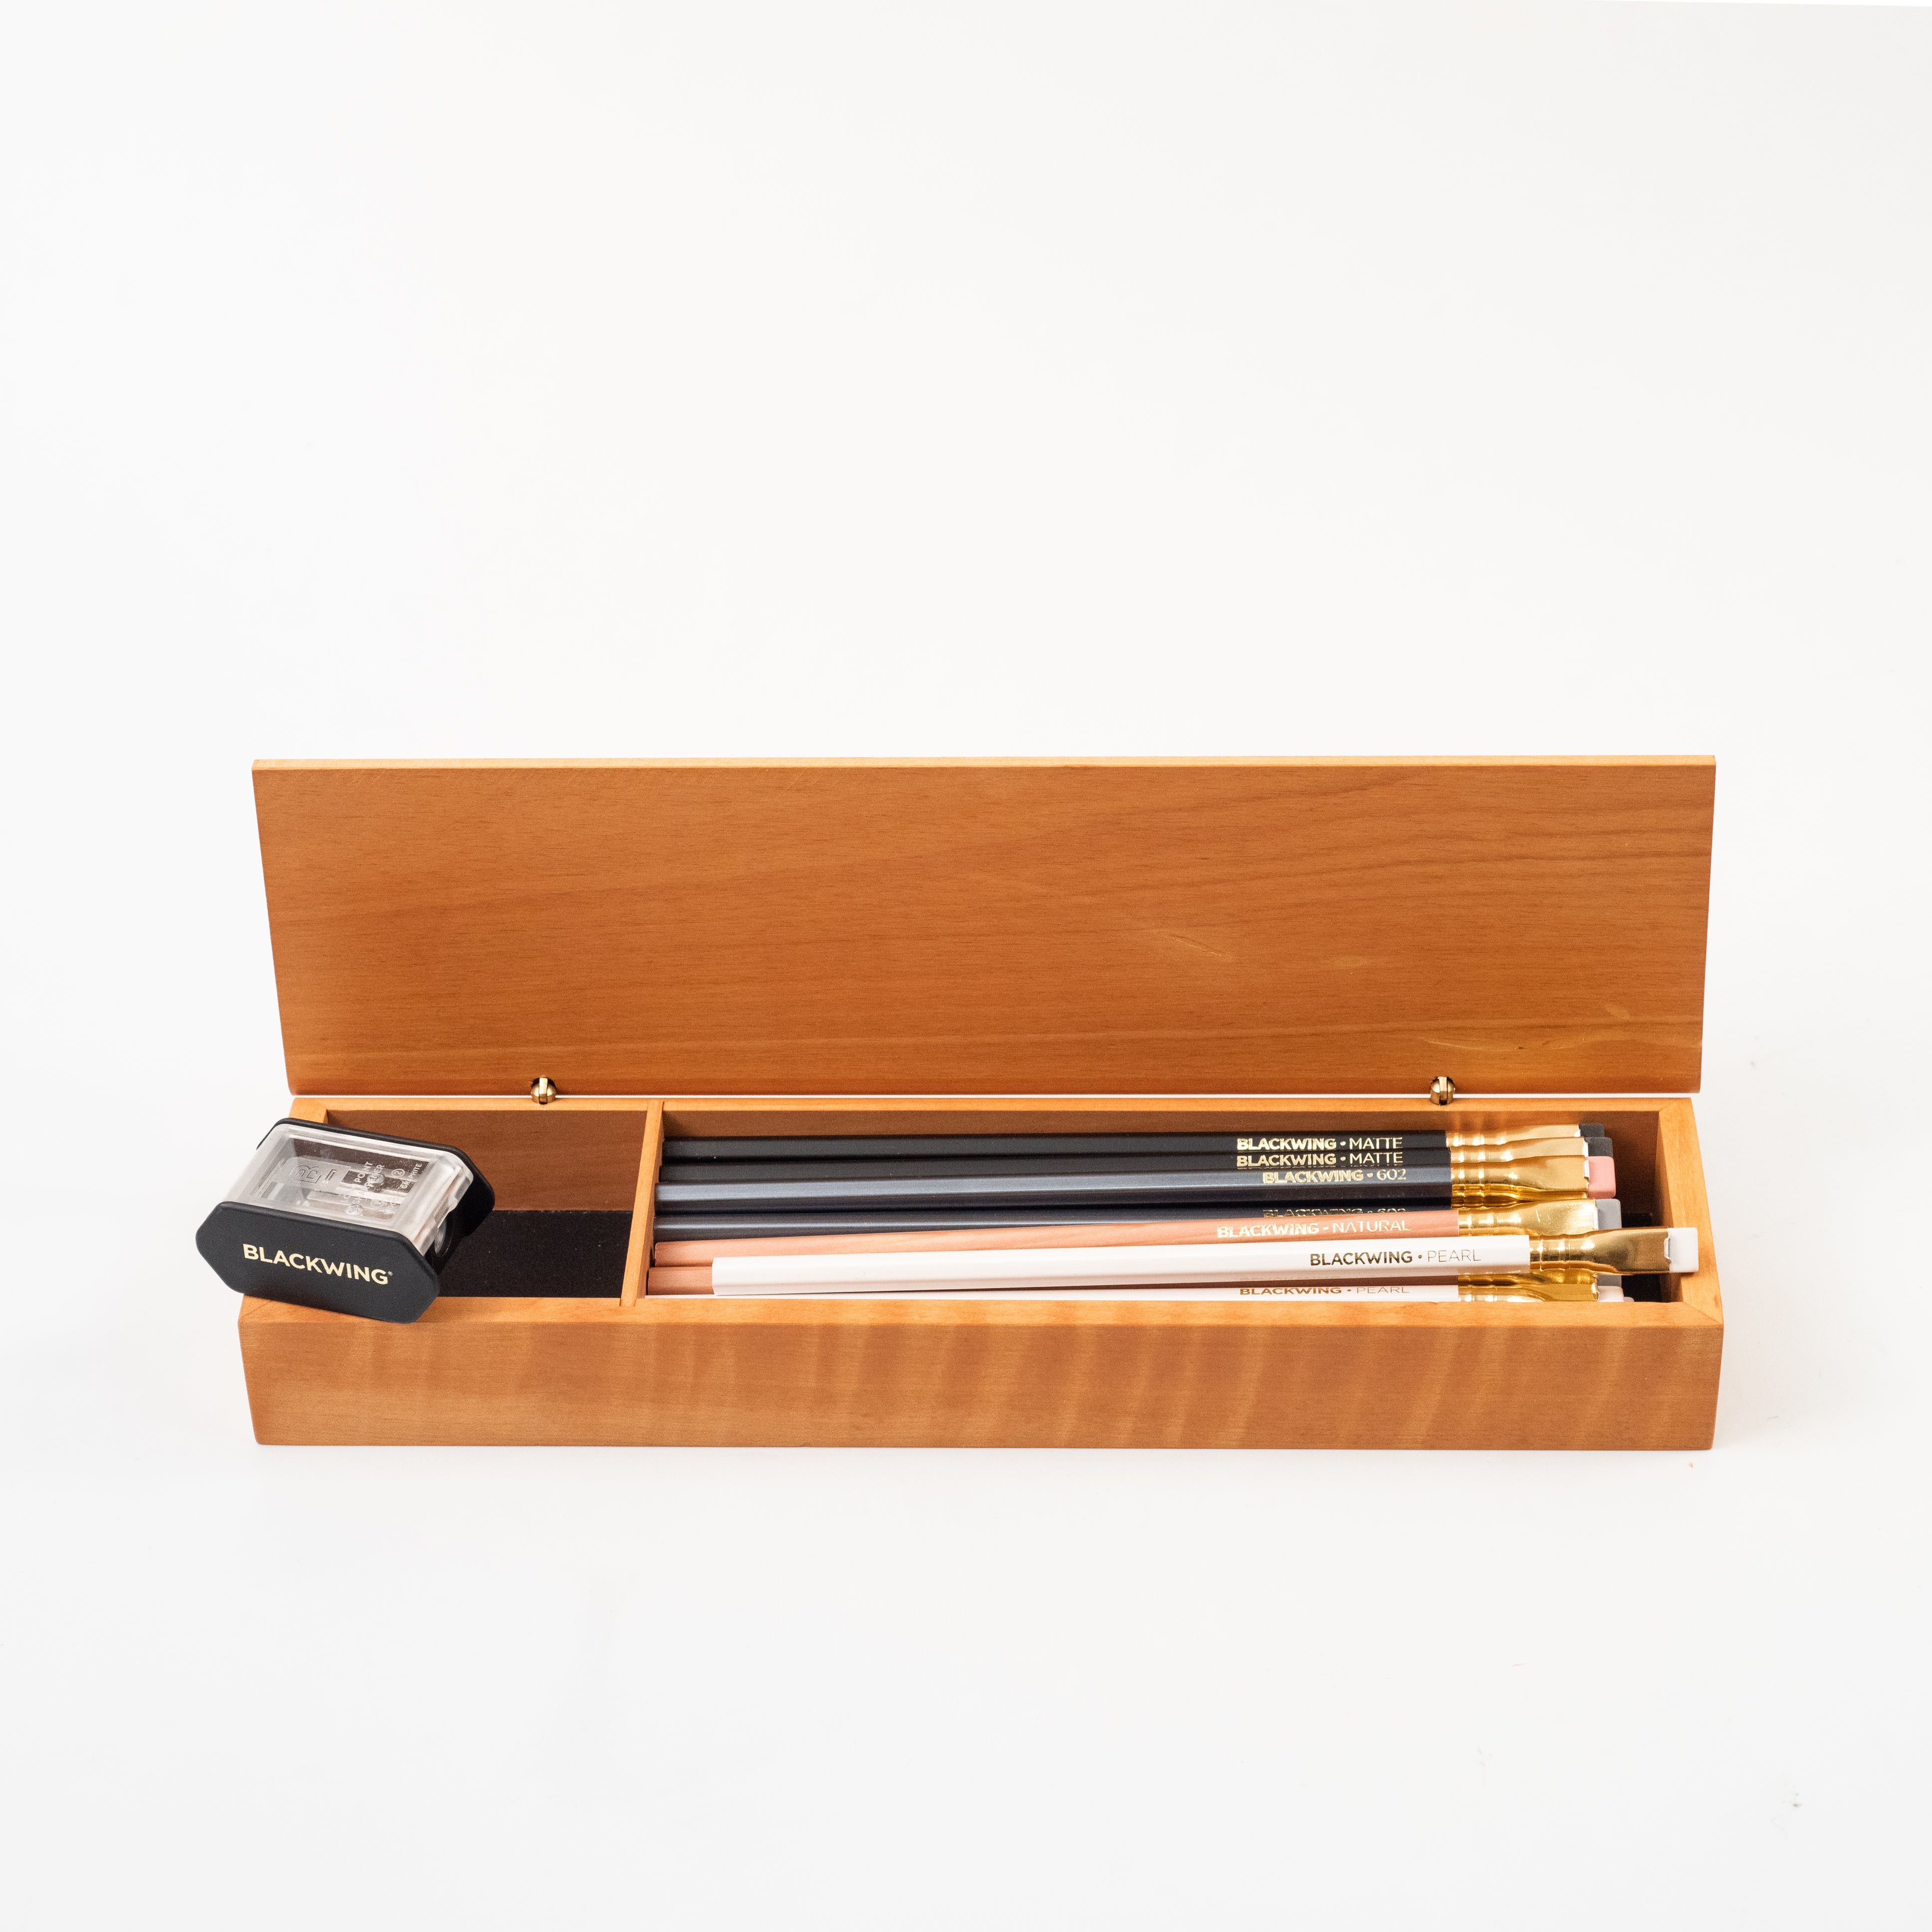 Blackwing 602 Wood Box Gift Set